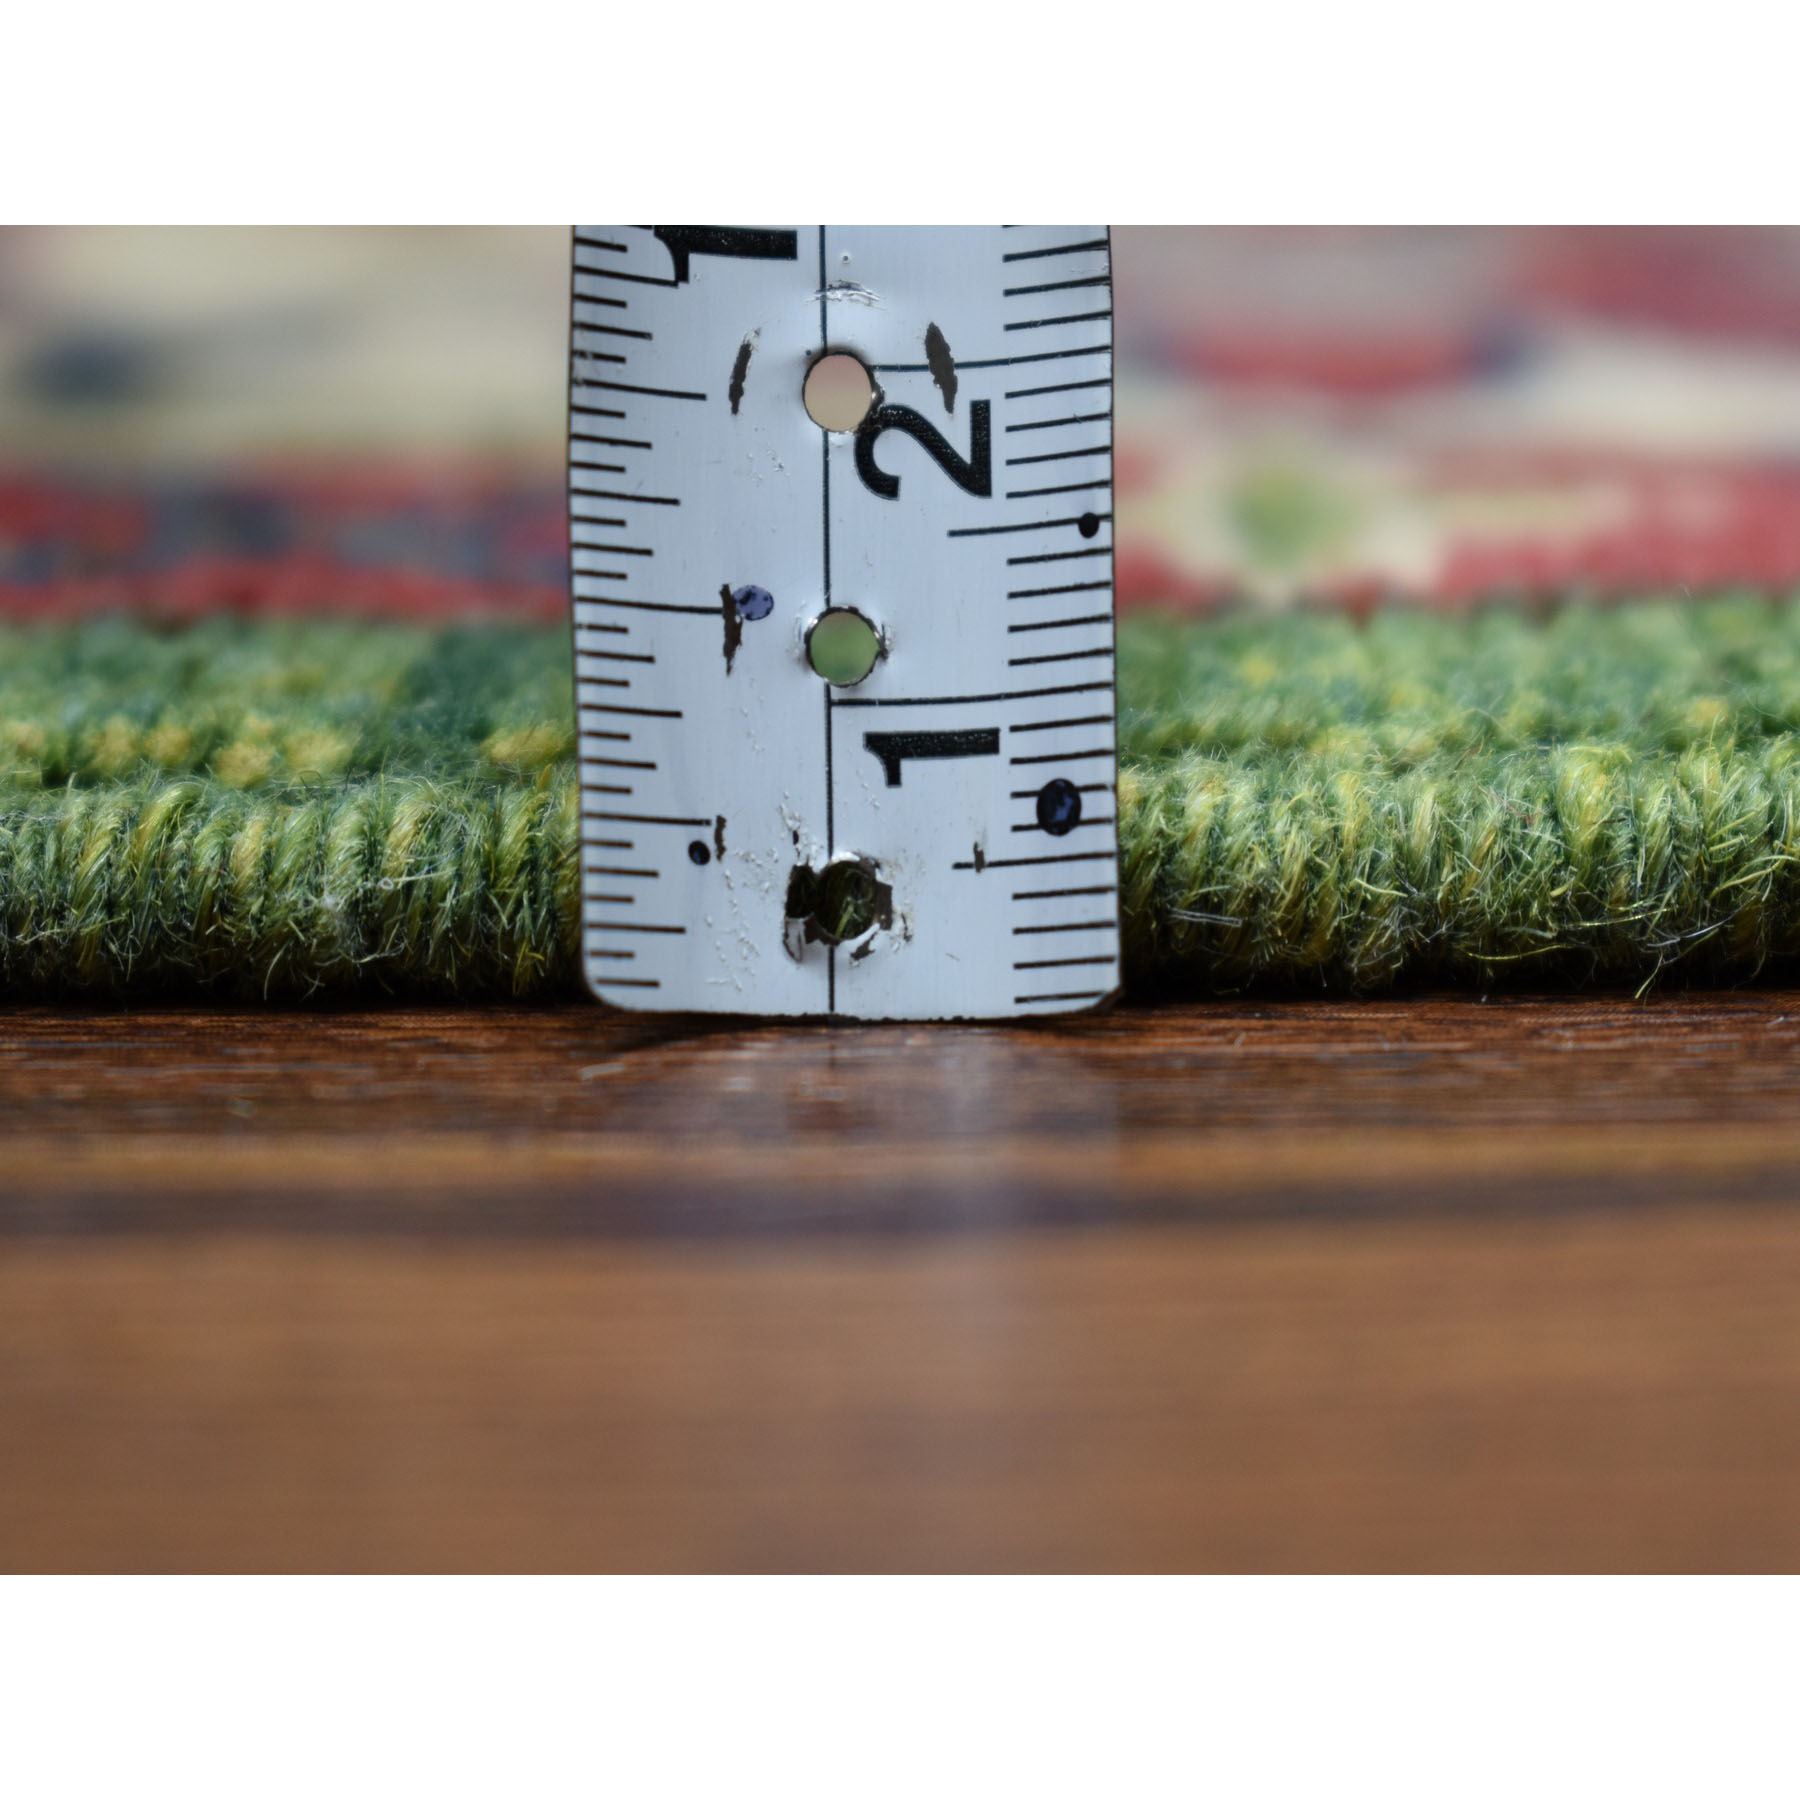 3-3 x4-8  Green Geometric Design Kazak Pure Wool Hand-Knotted Oriental Rug 